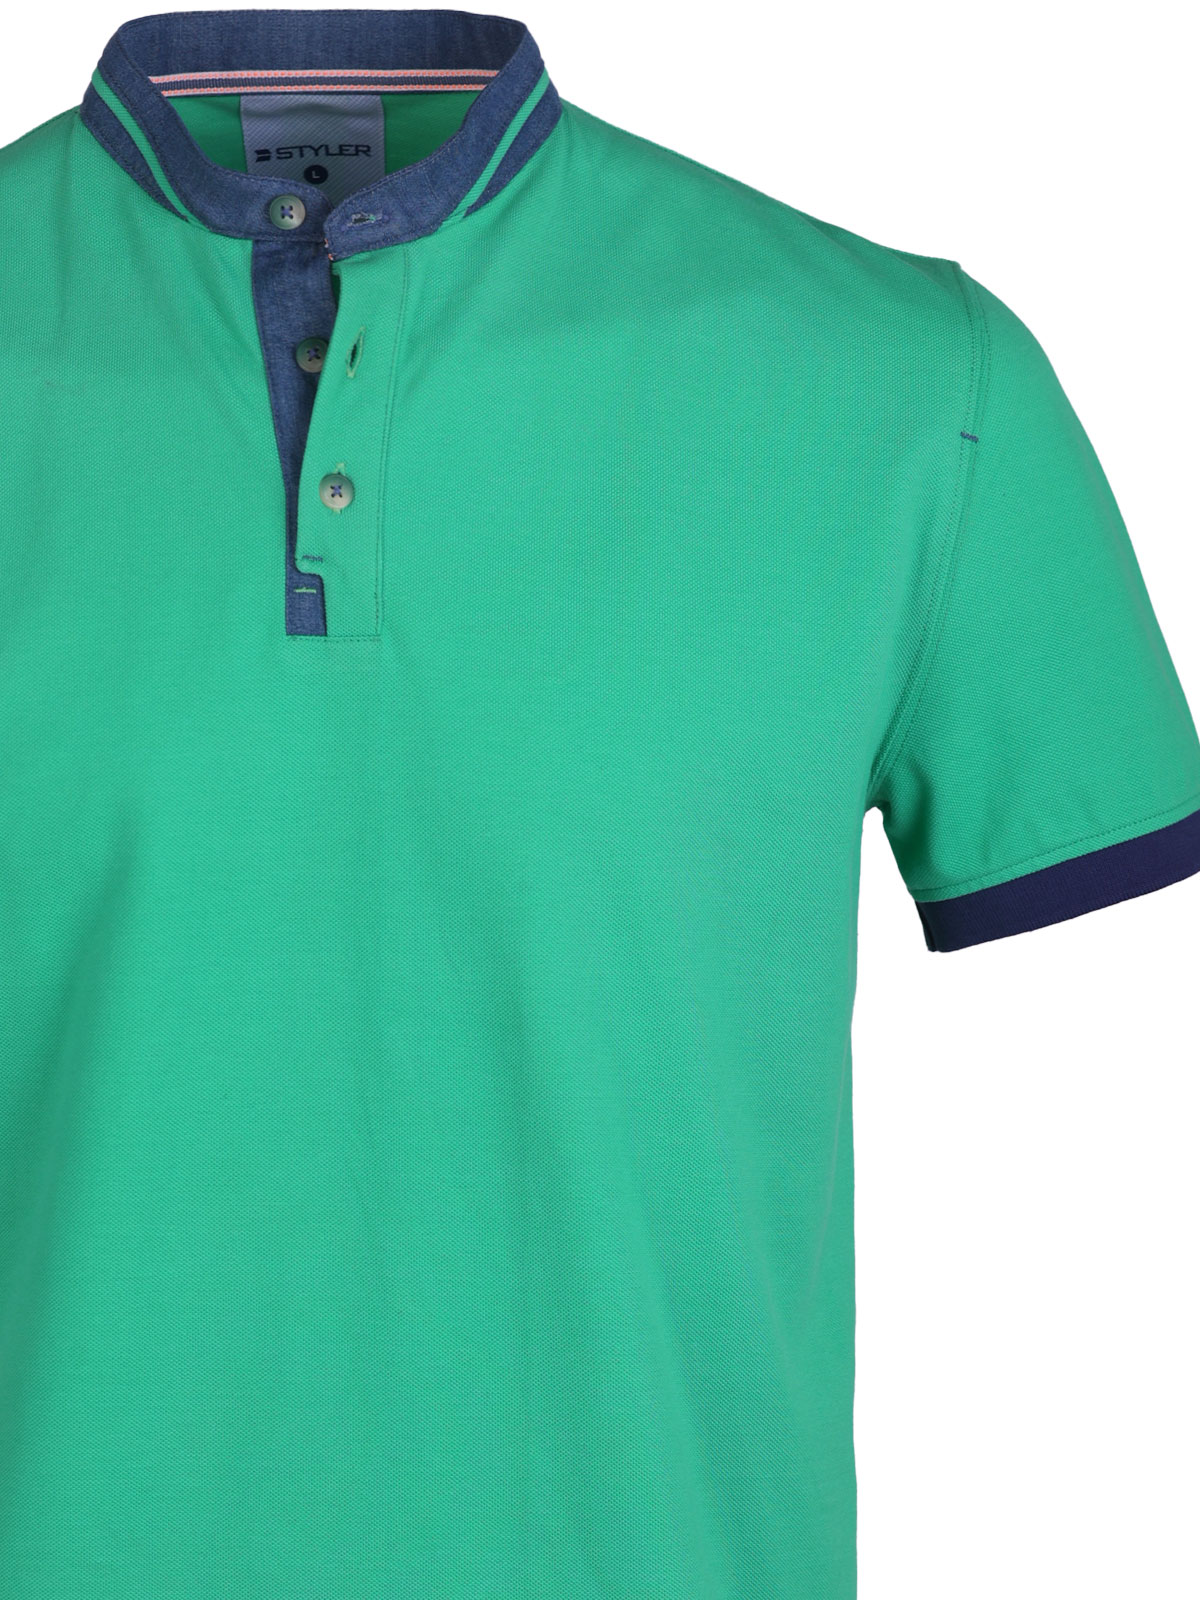 Blouse with short sleeves green melange - 93440 € 40.49 img3